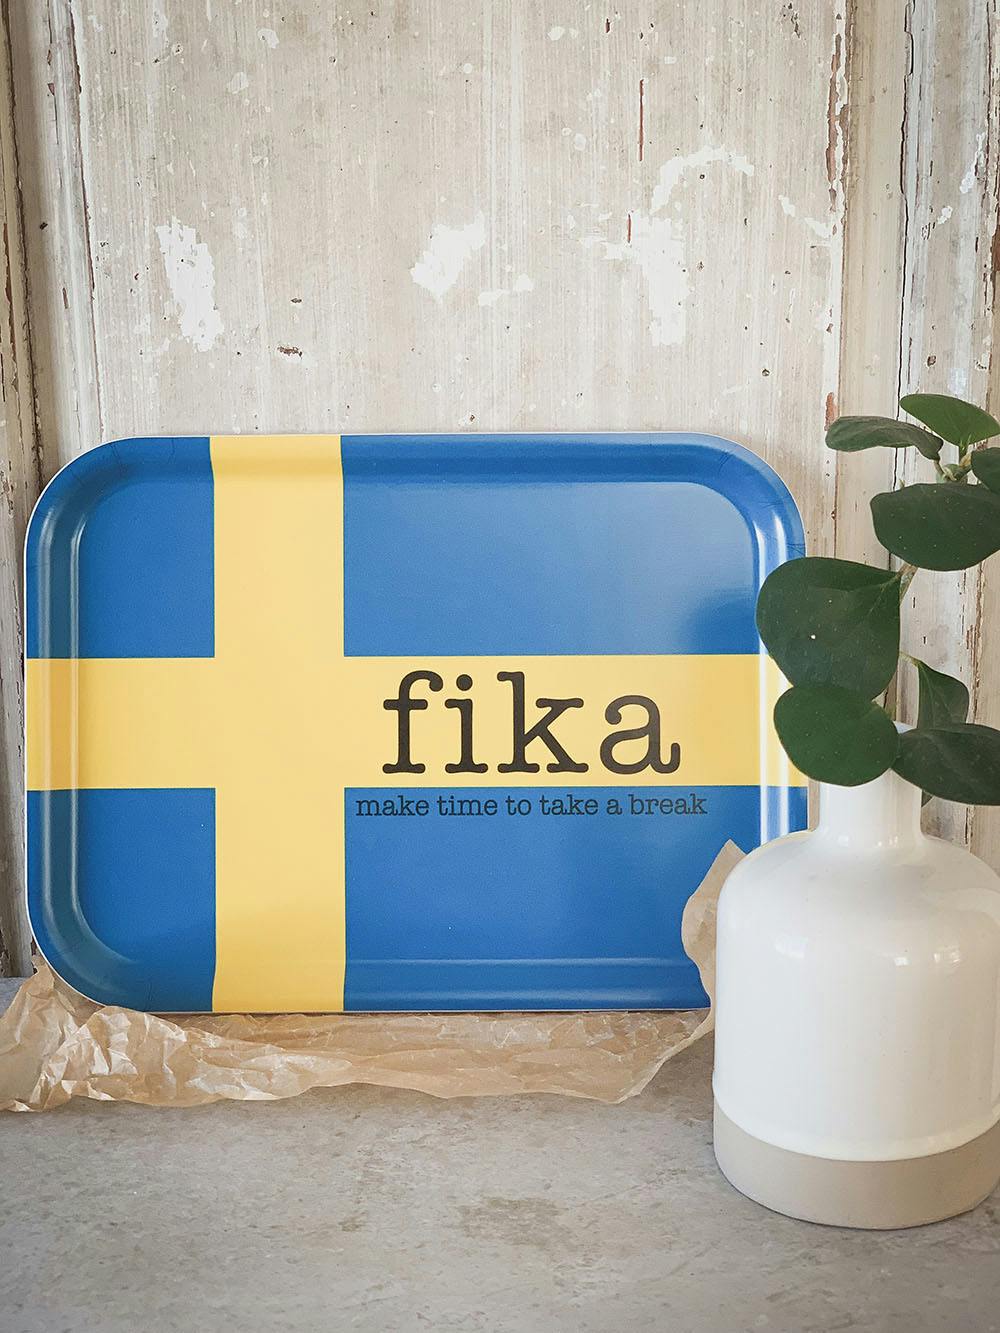 Mellow Design Bricka FIKA Svenska Flaggan